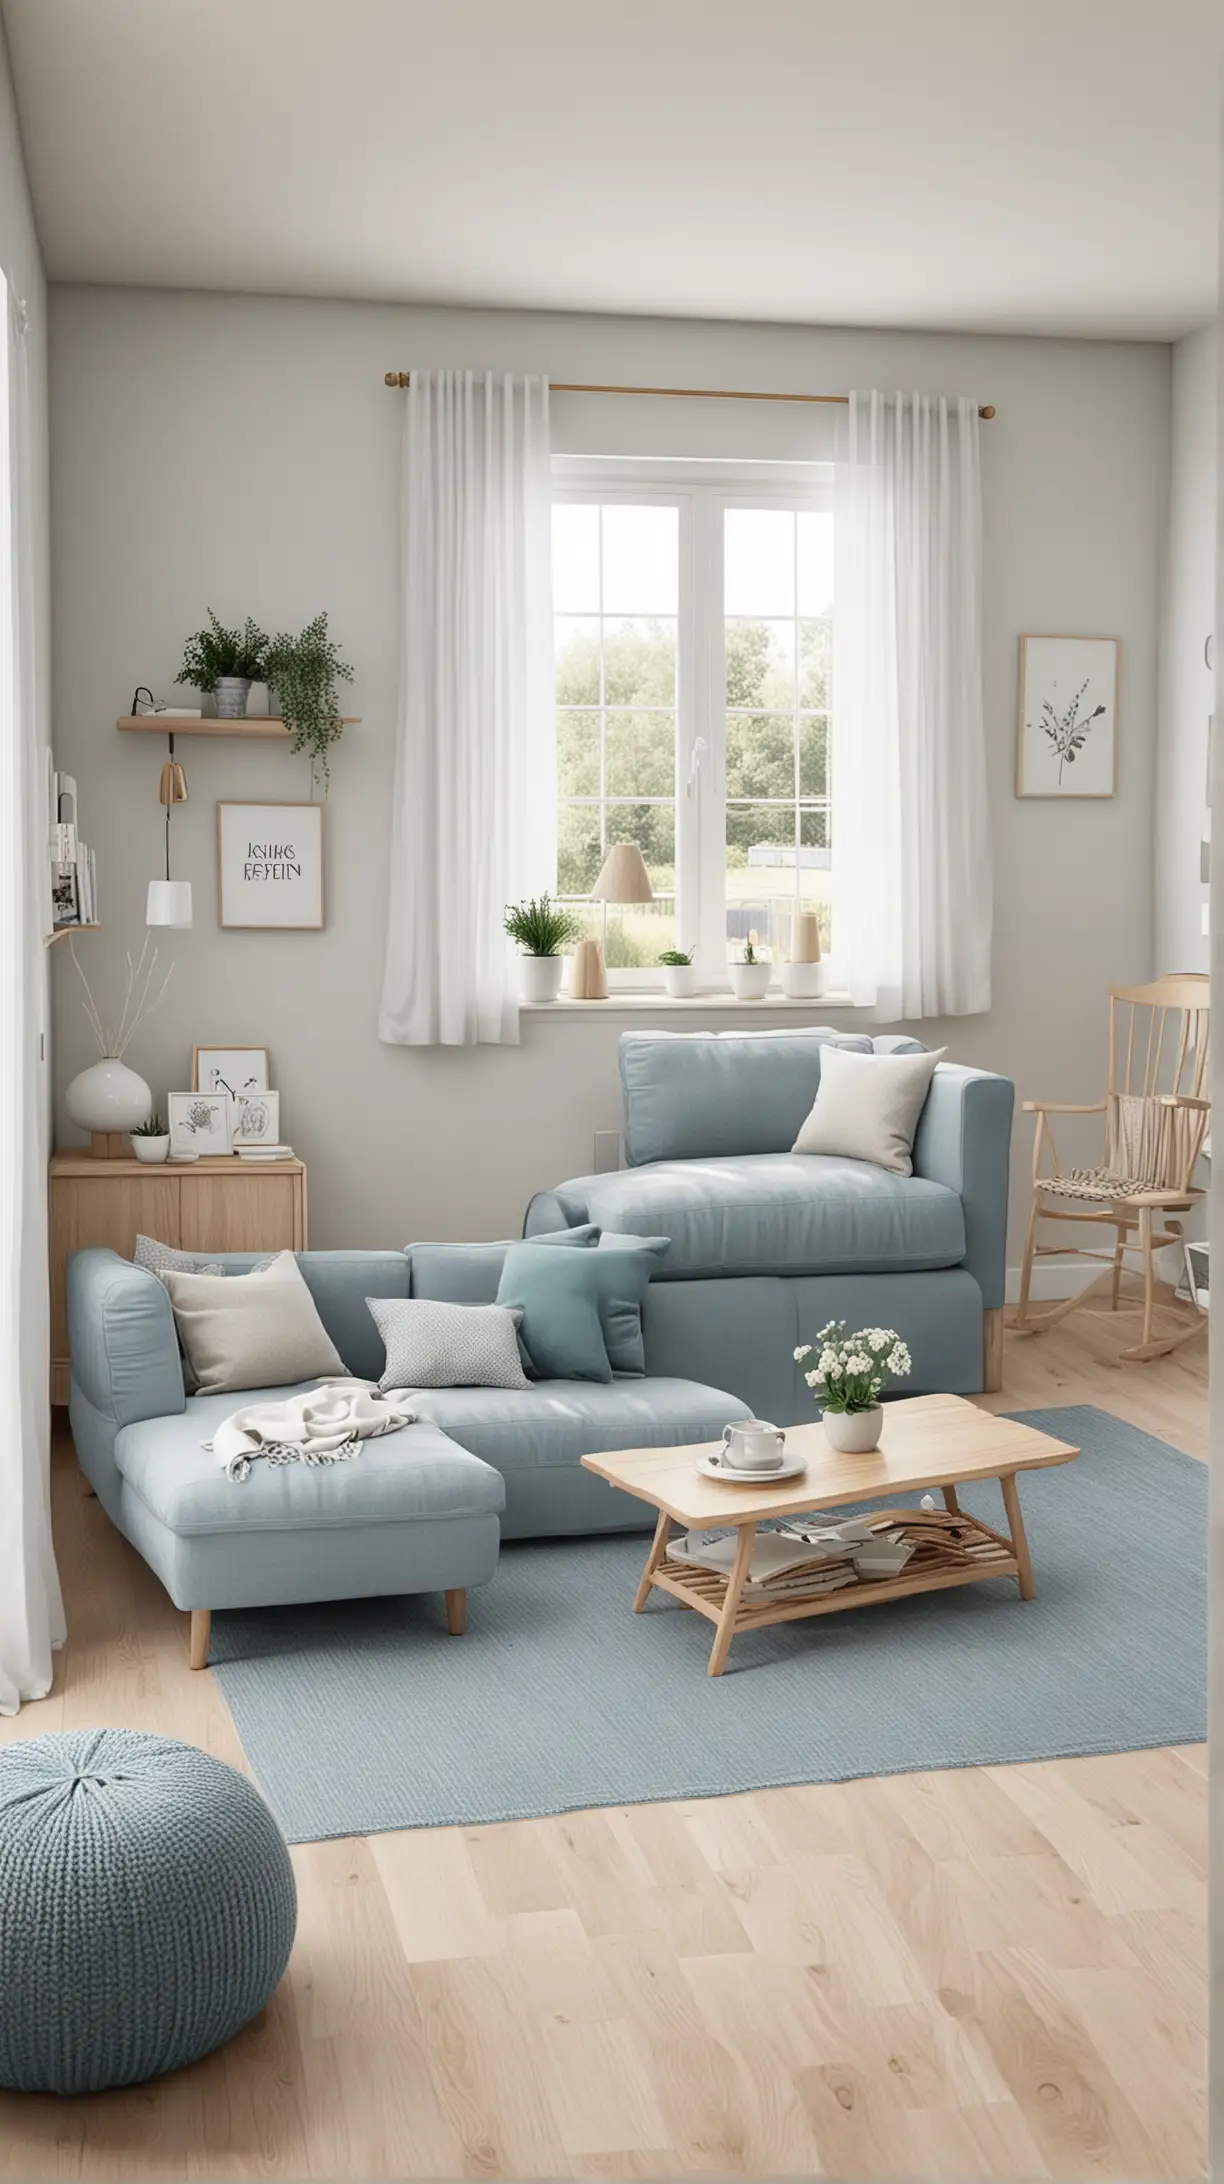 Scandinavianstyle Bloxburg Living Room with Light Wood Furniture